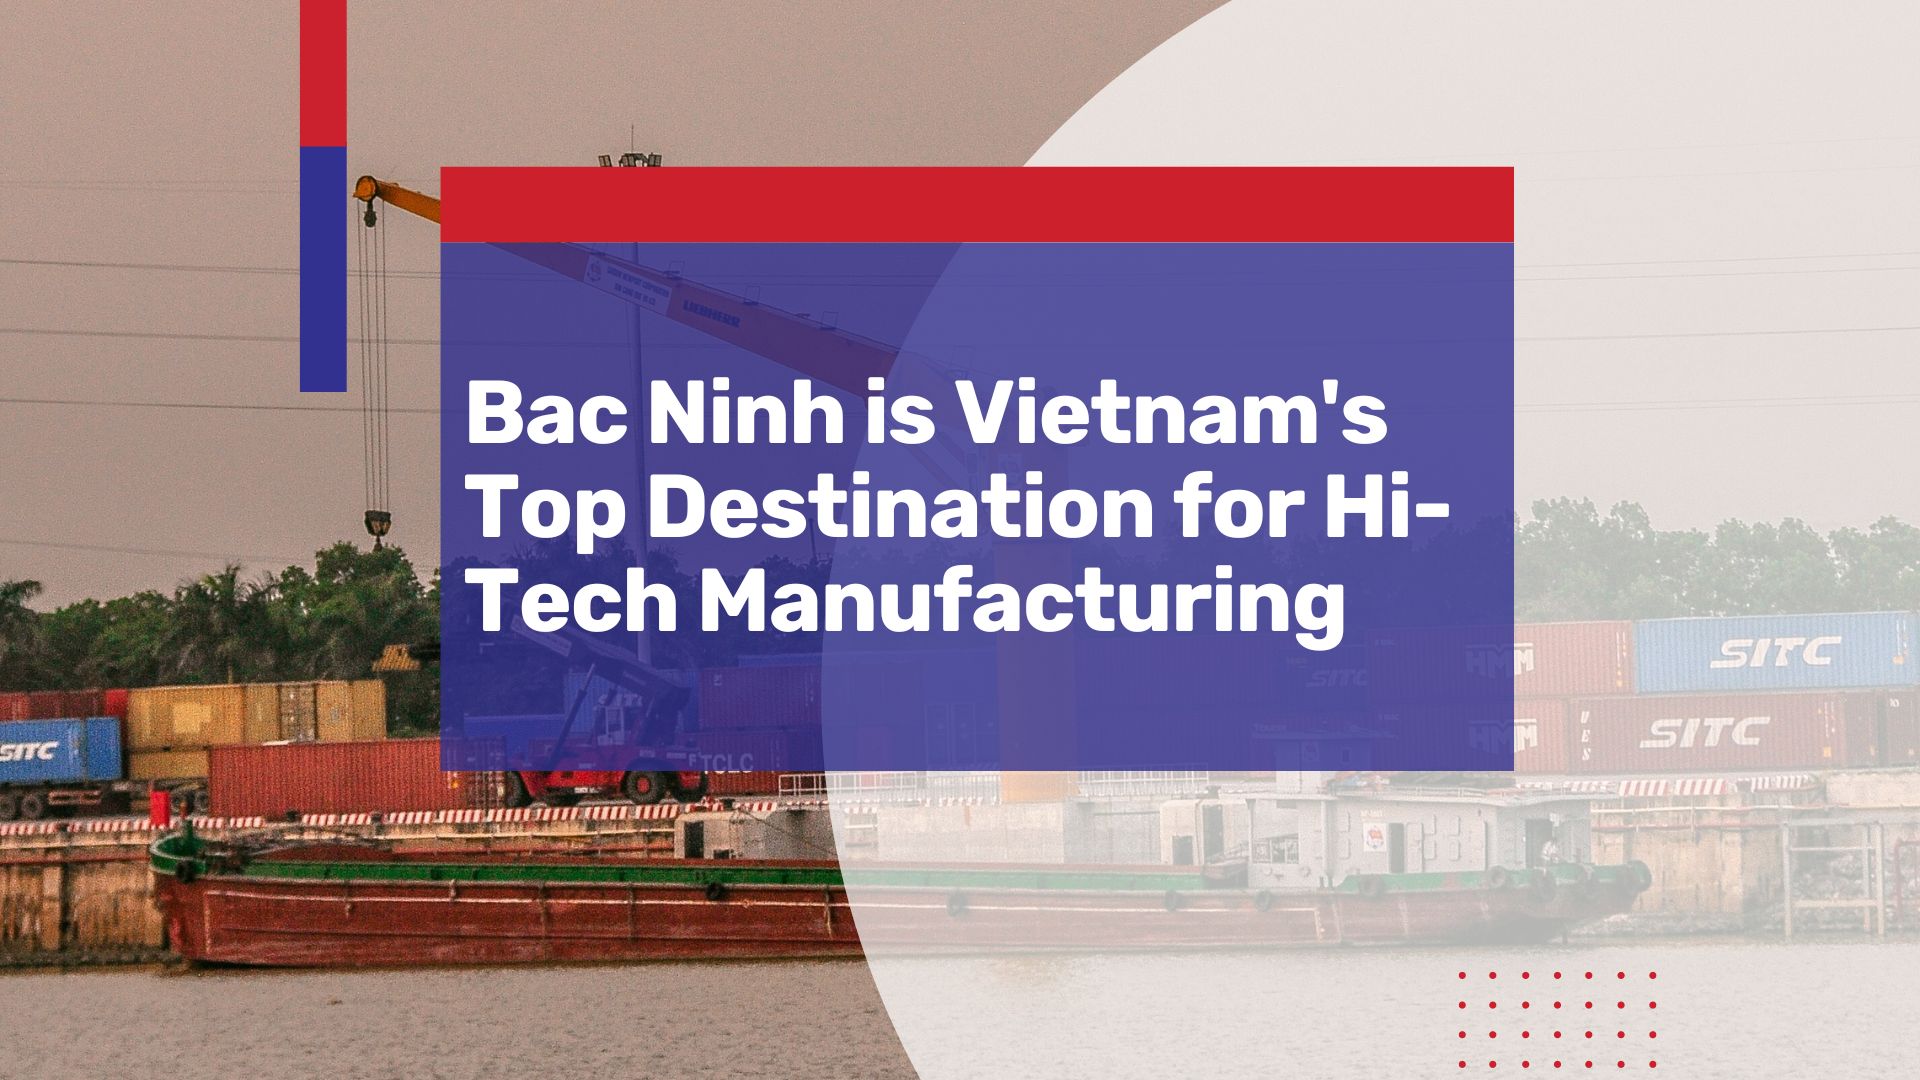 Bac Ninh is Vietnam’s Top Destination for High-Tech Manufacturing